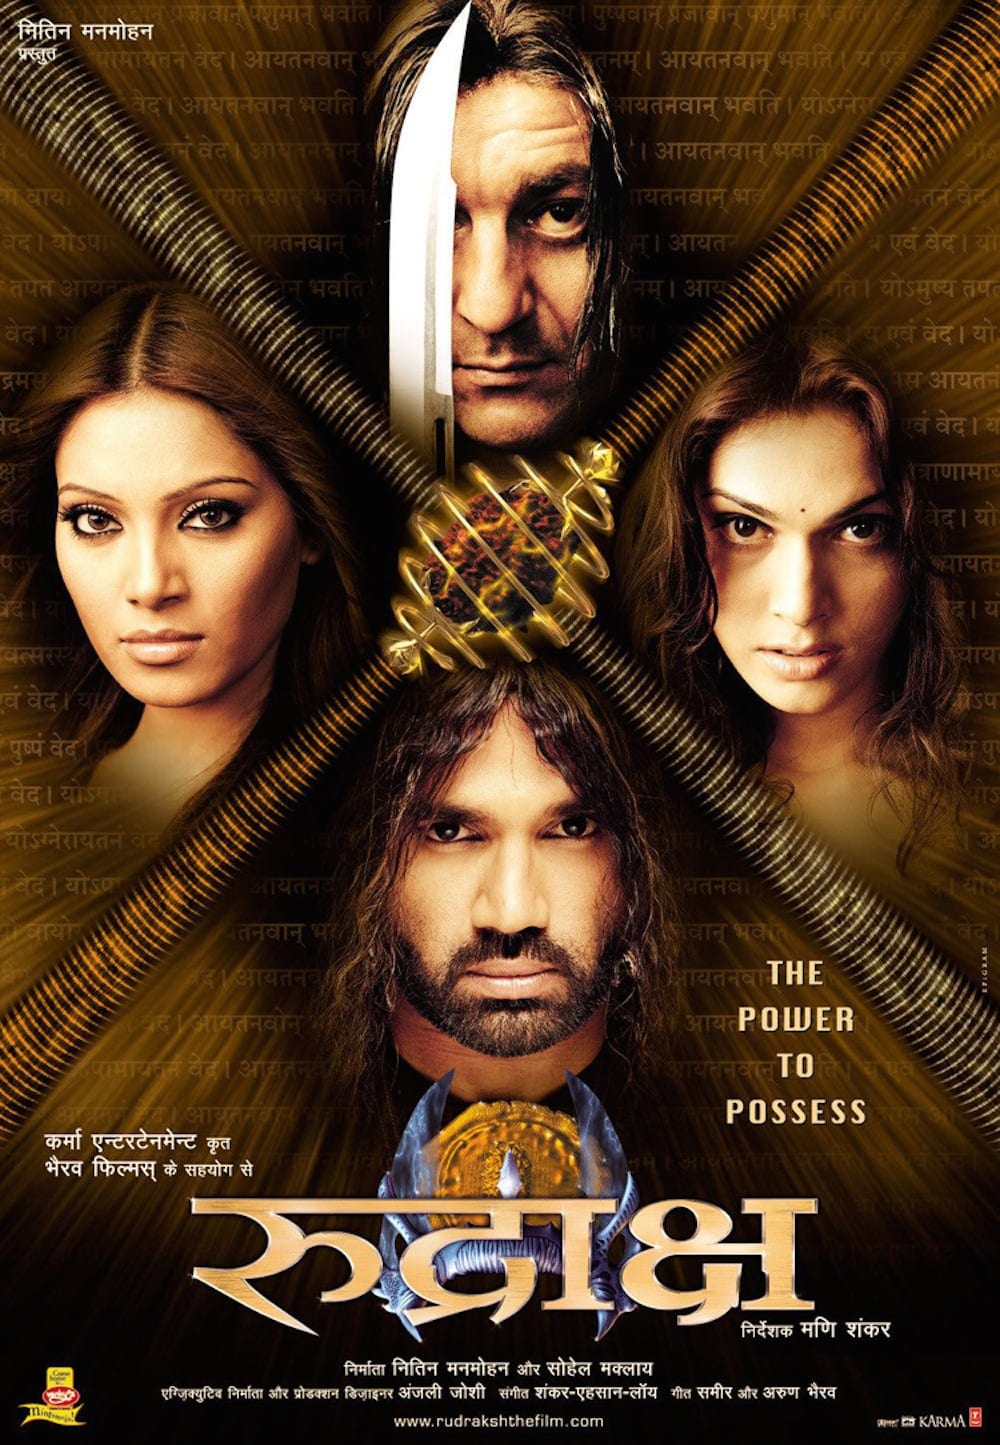 Poster for the movie "Rudraksh"